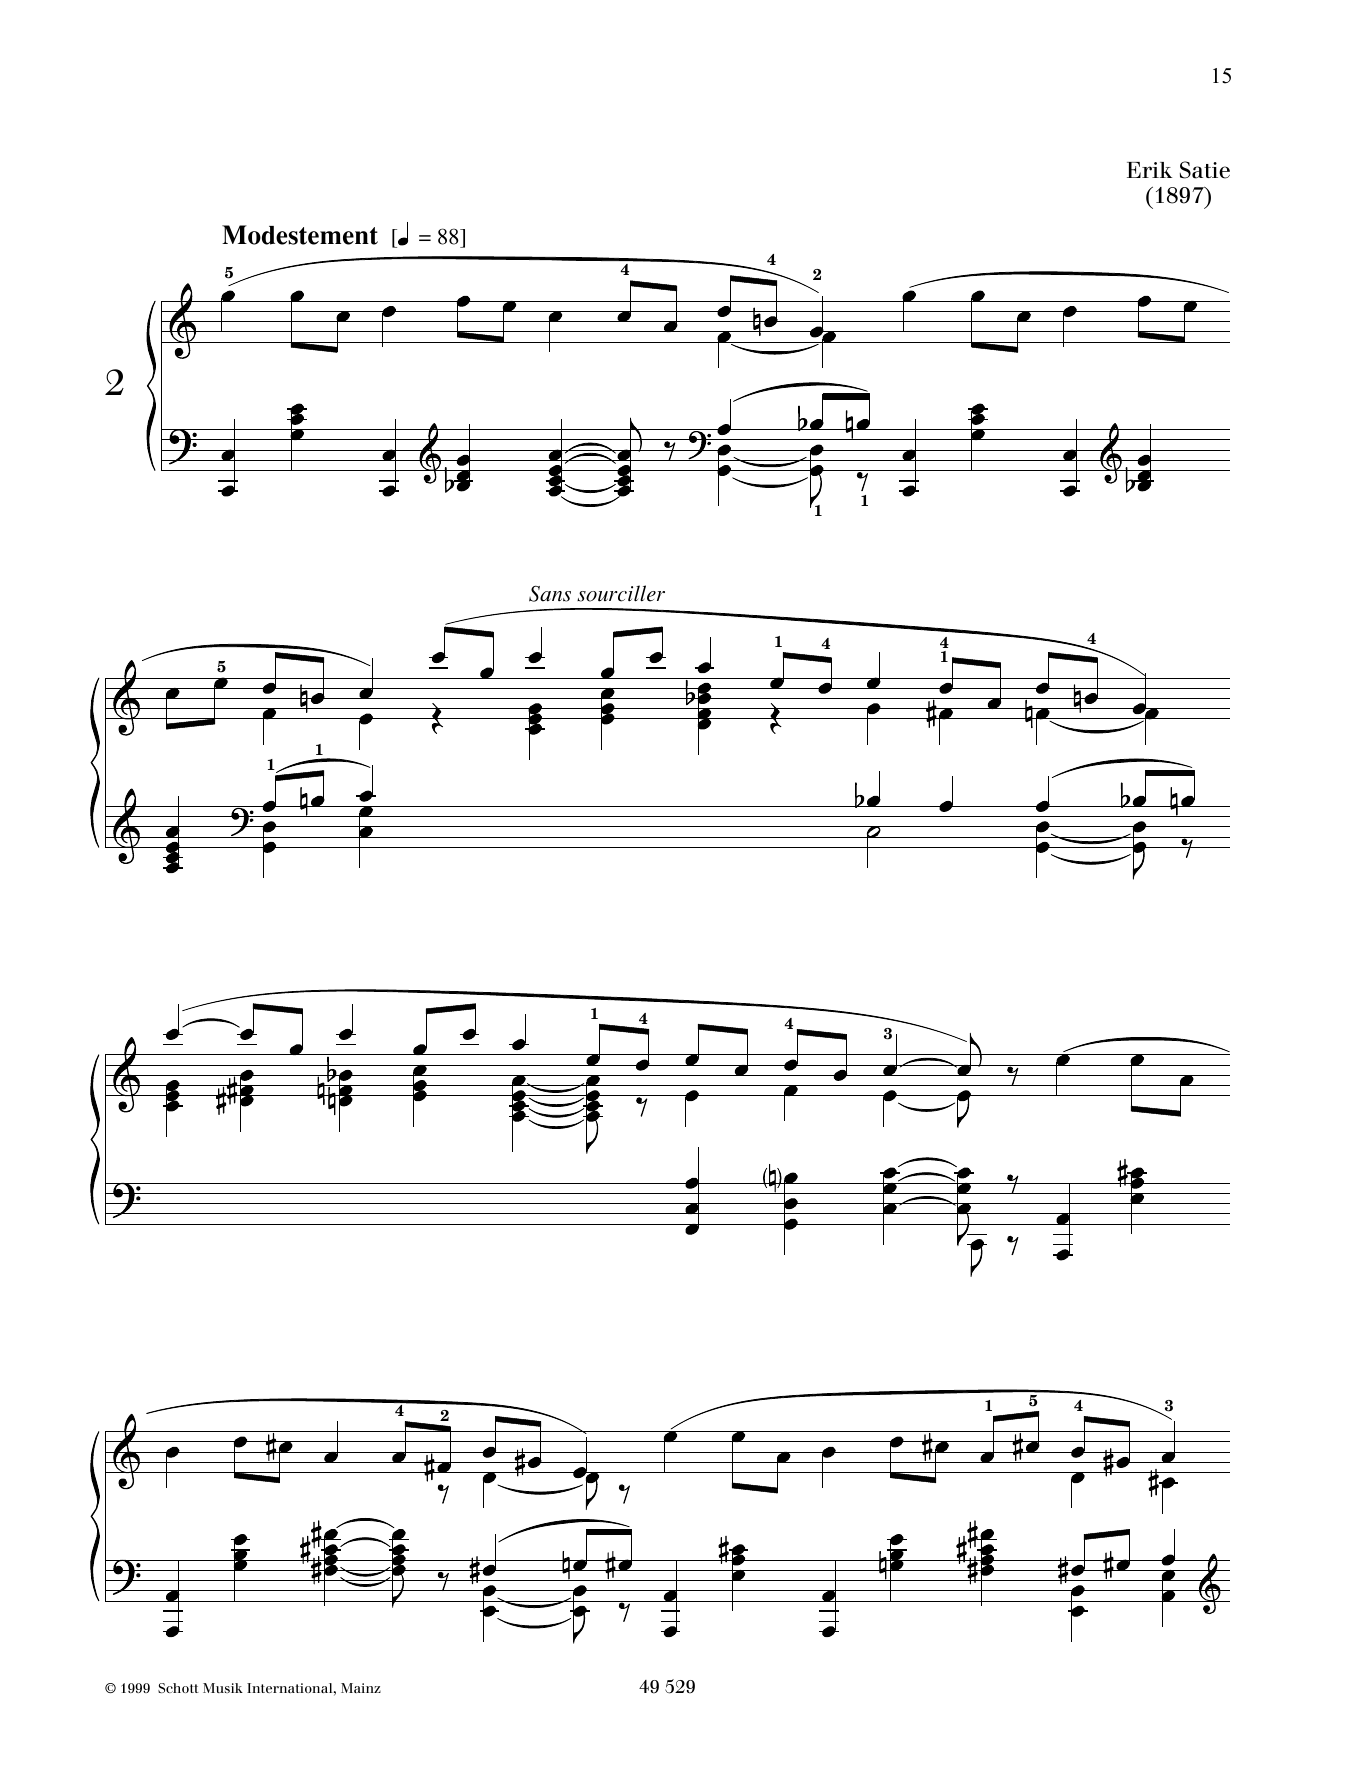 Erik Satie Air à faire fuir No. 2 Sheet Music Notes & Chords for Piano Solo - Download or Print PDF